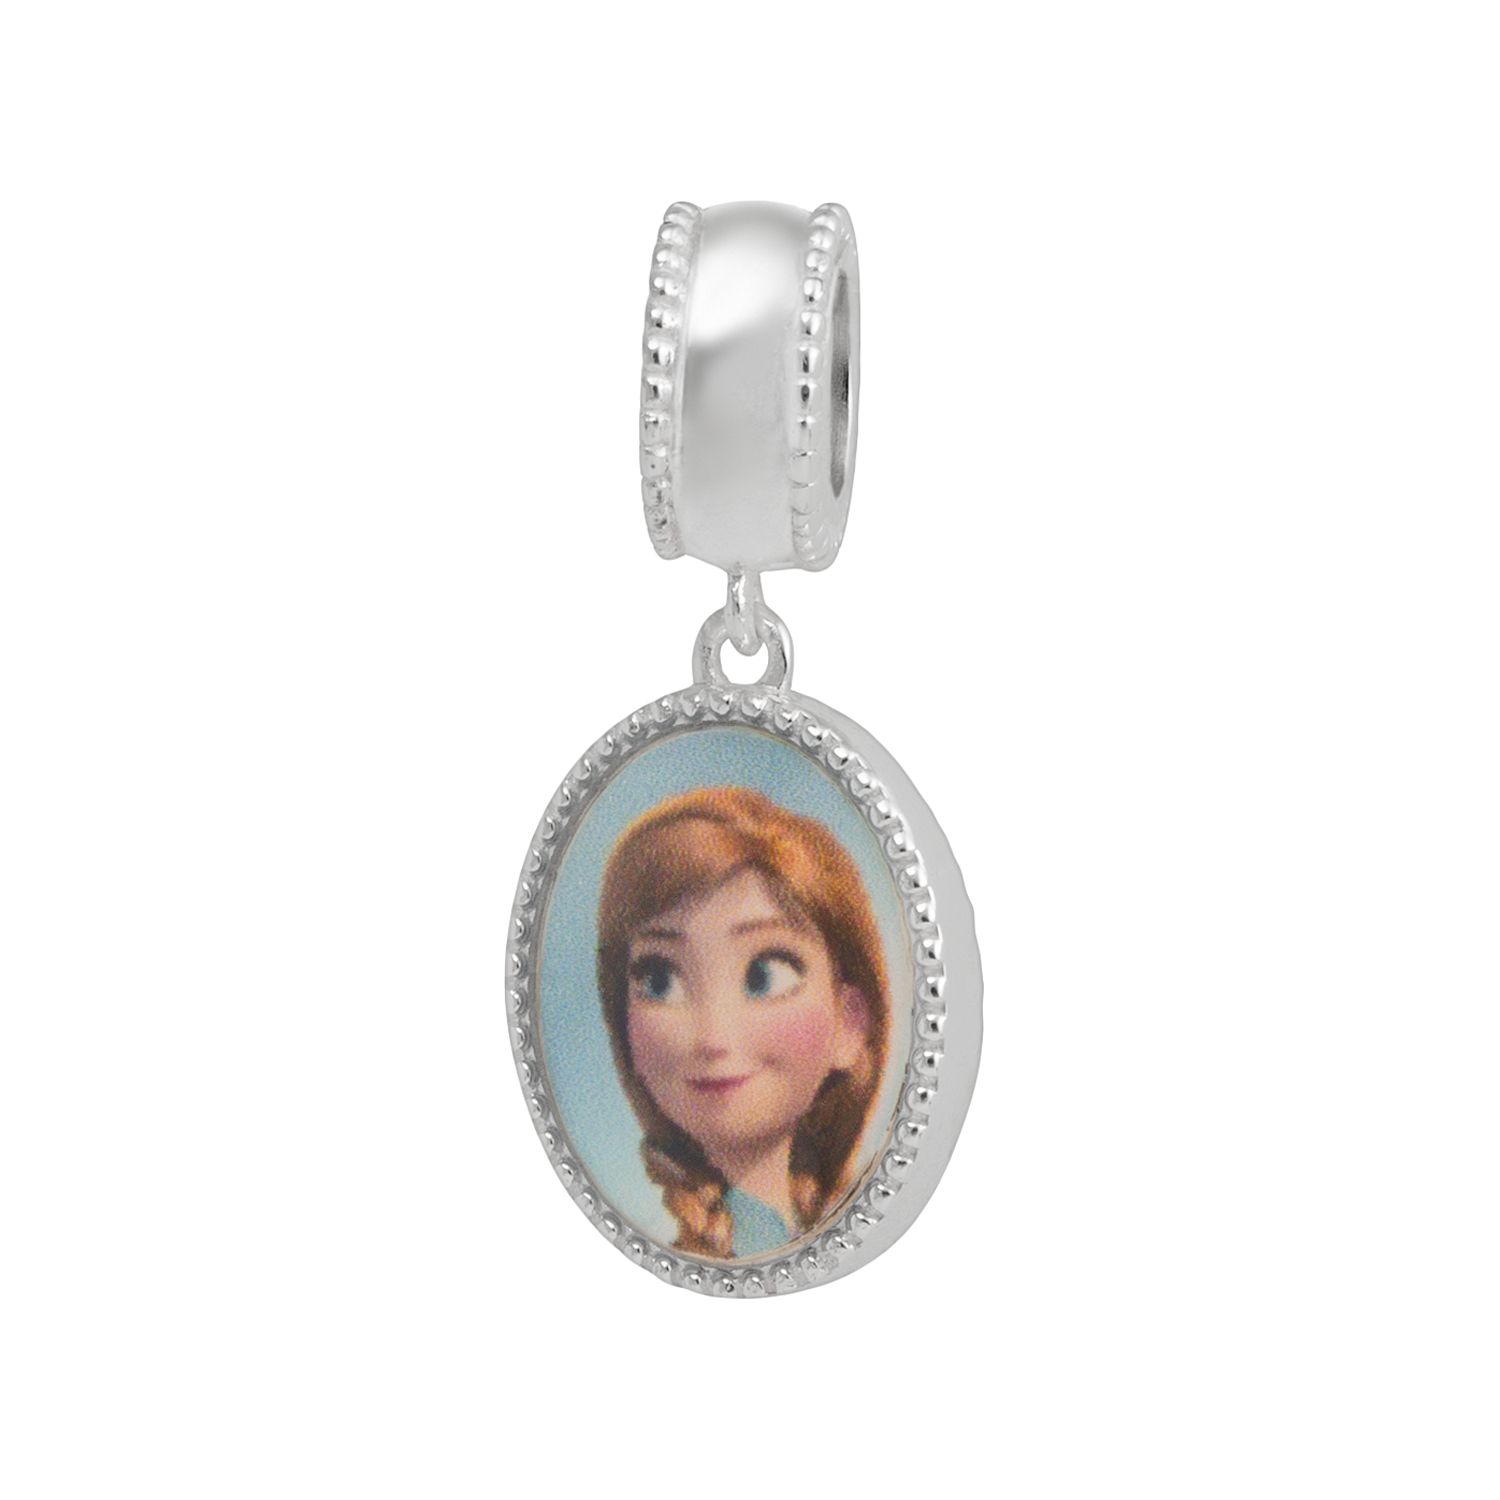 Image for Disney Frozen Sterling Silver Anna & Elsa Reversible Charm at Kohl's.